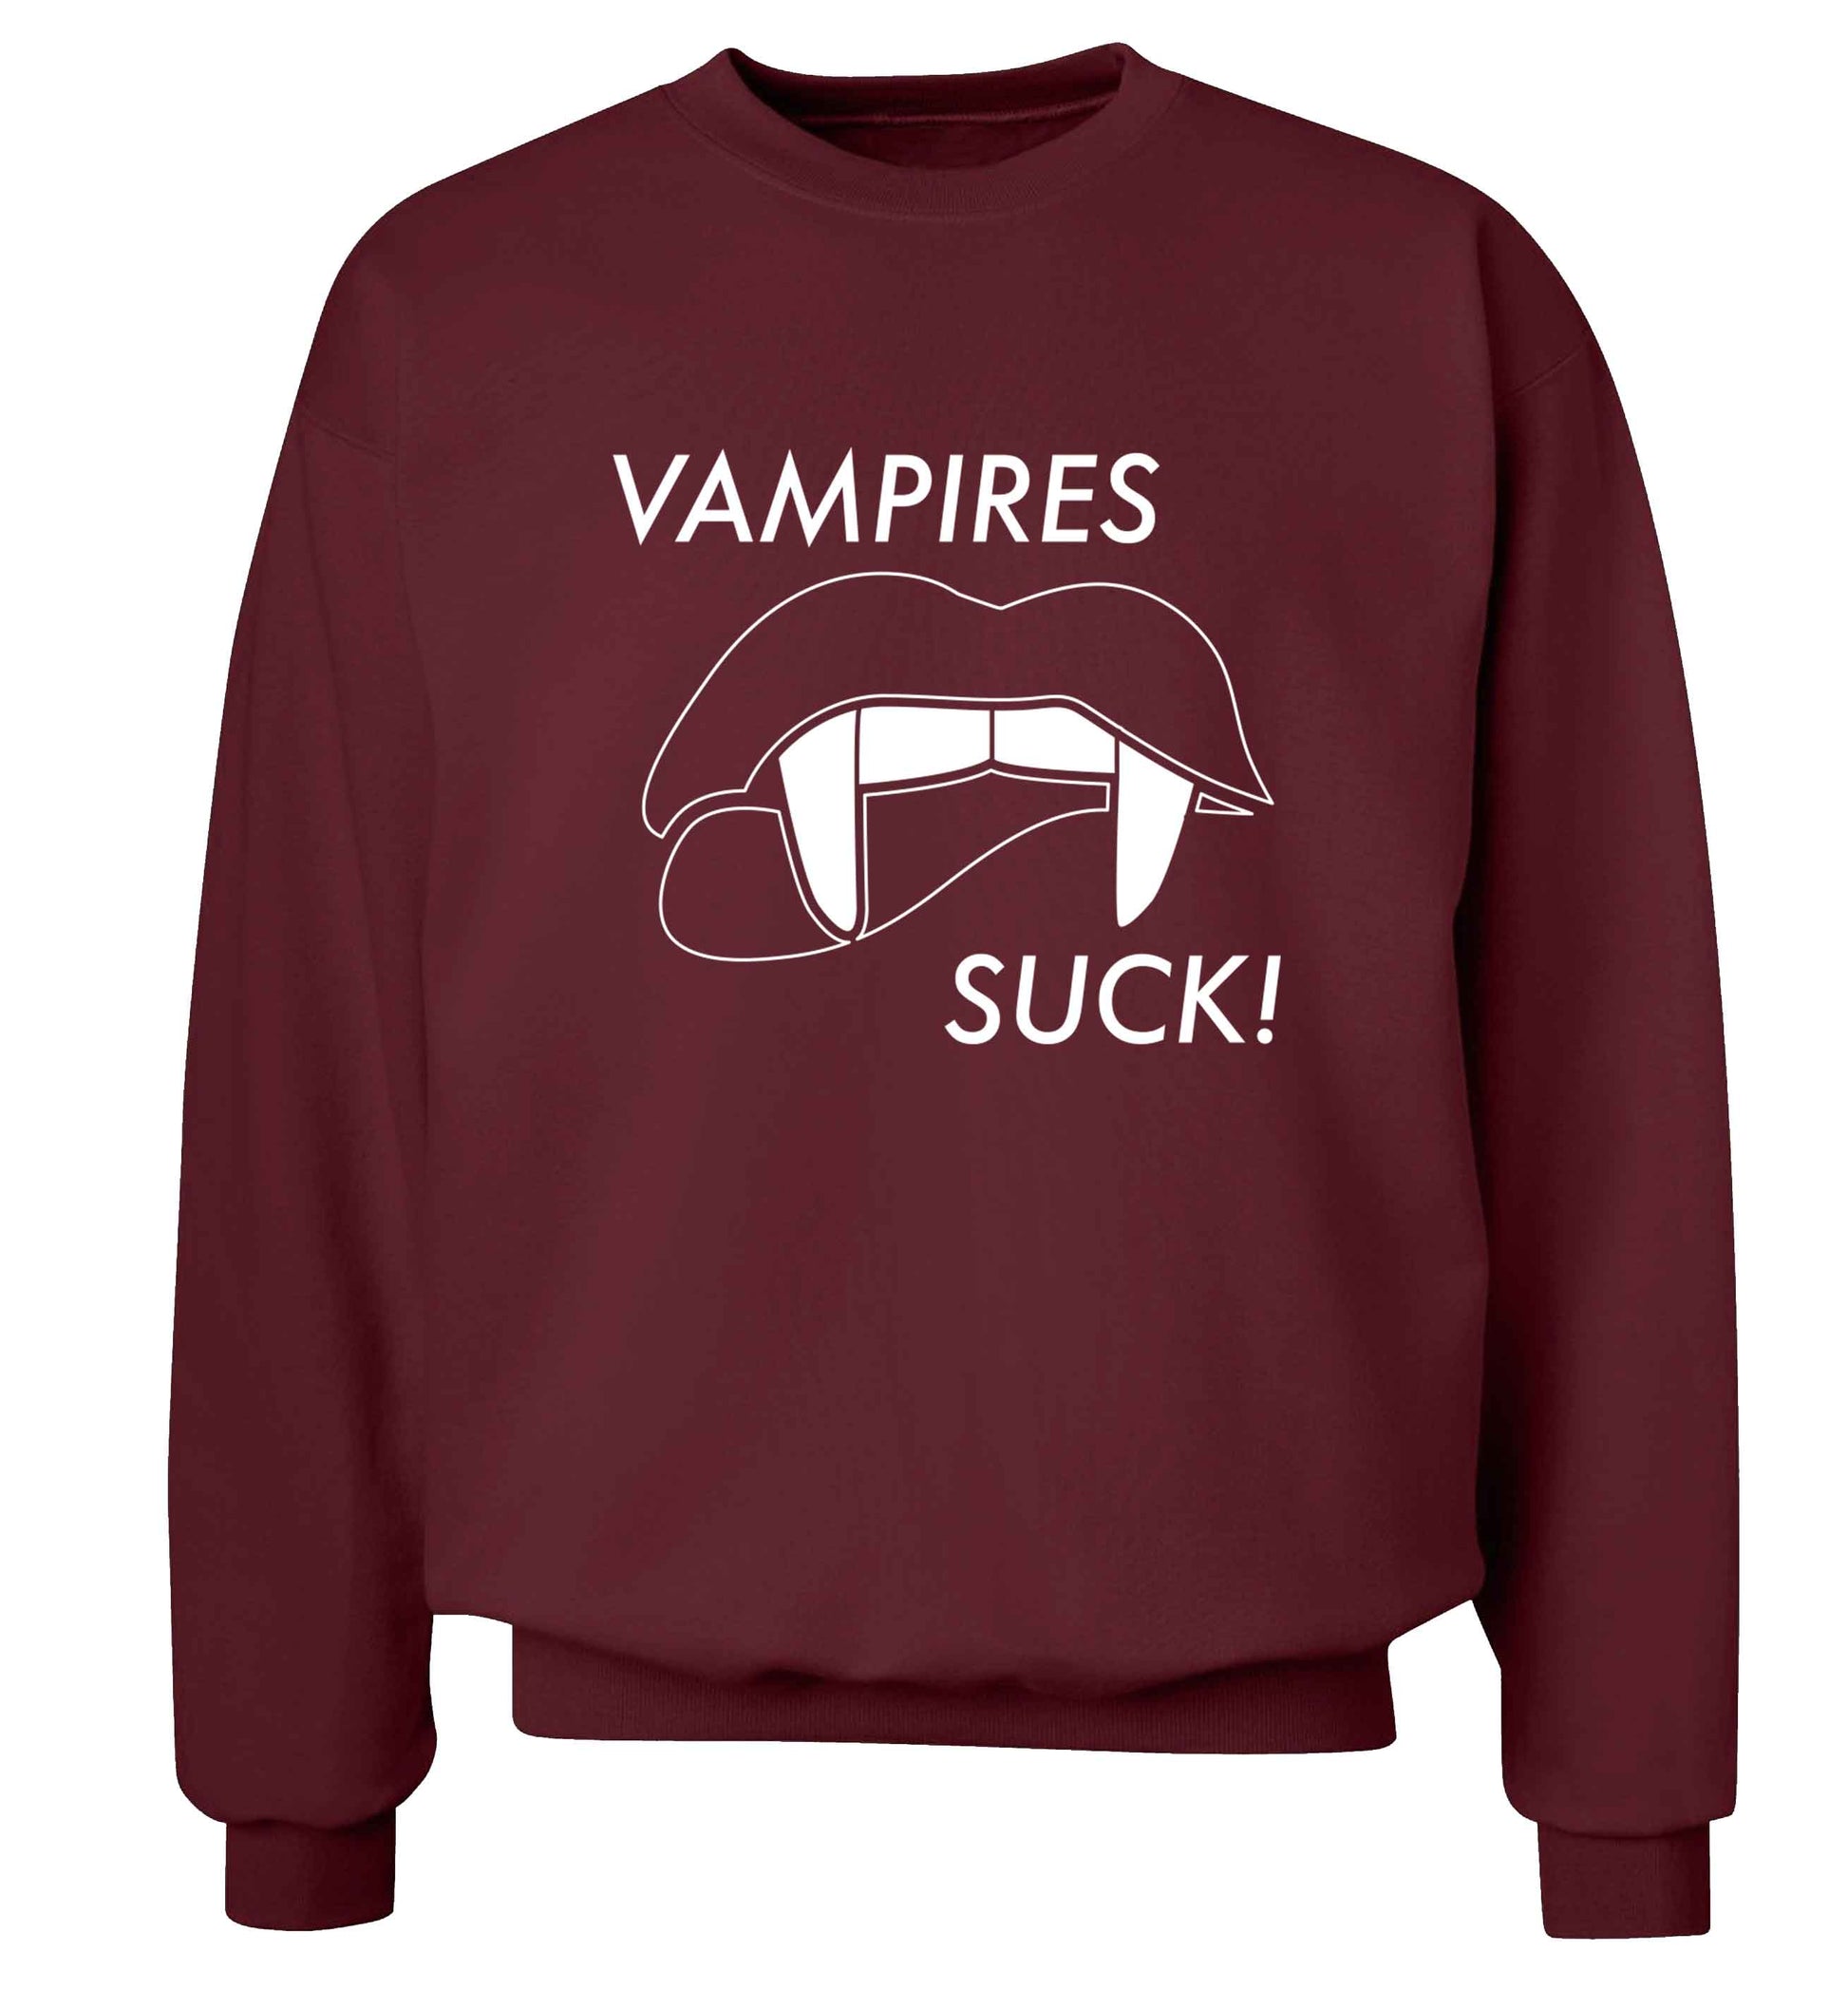 Vampires suck adult's unisex maroon sweater 2XL